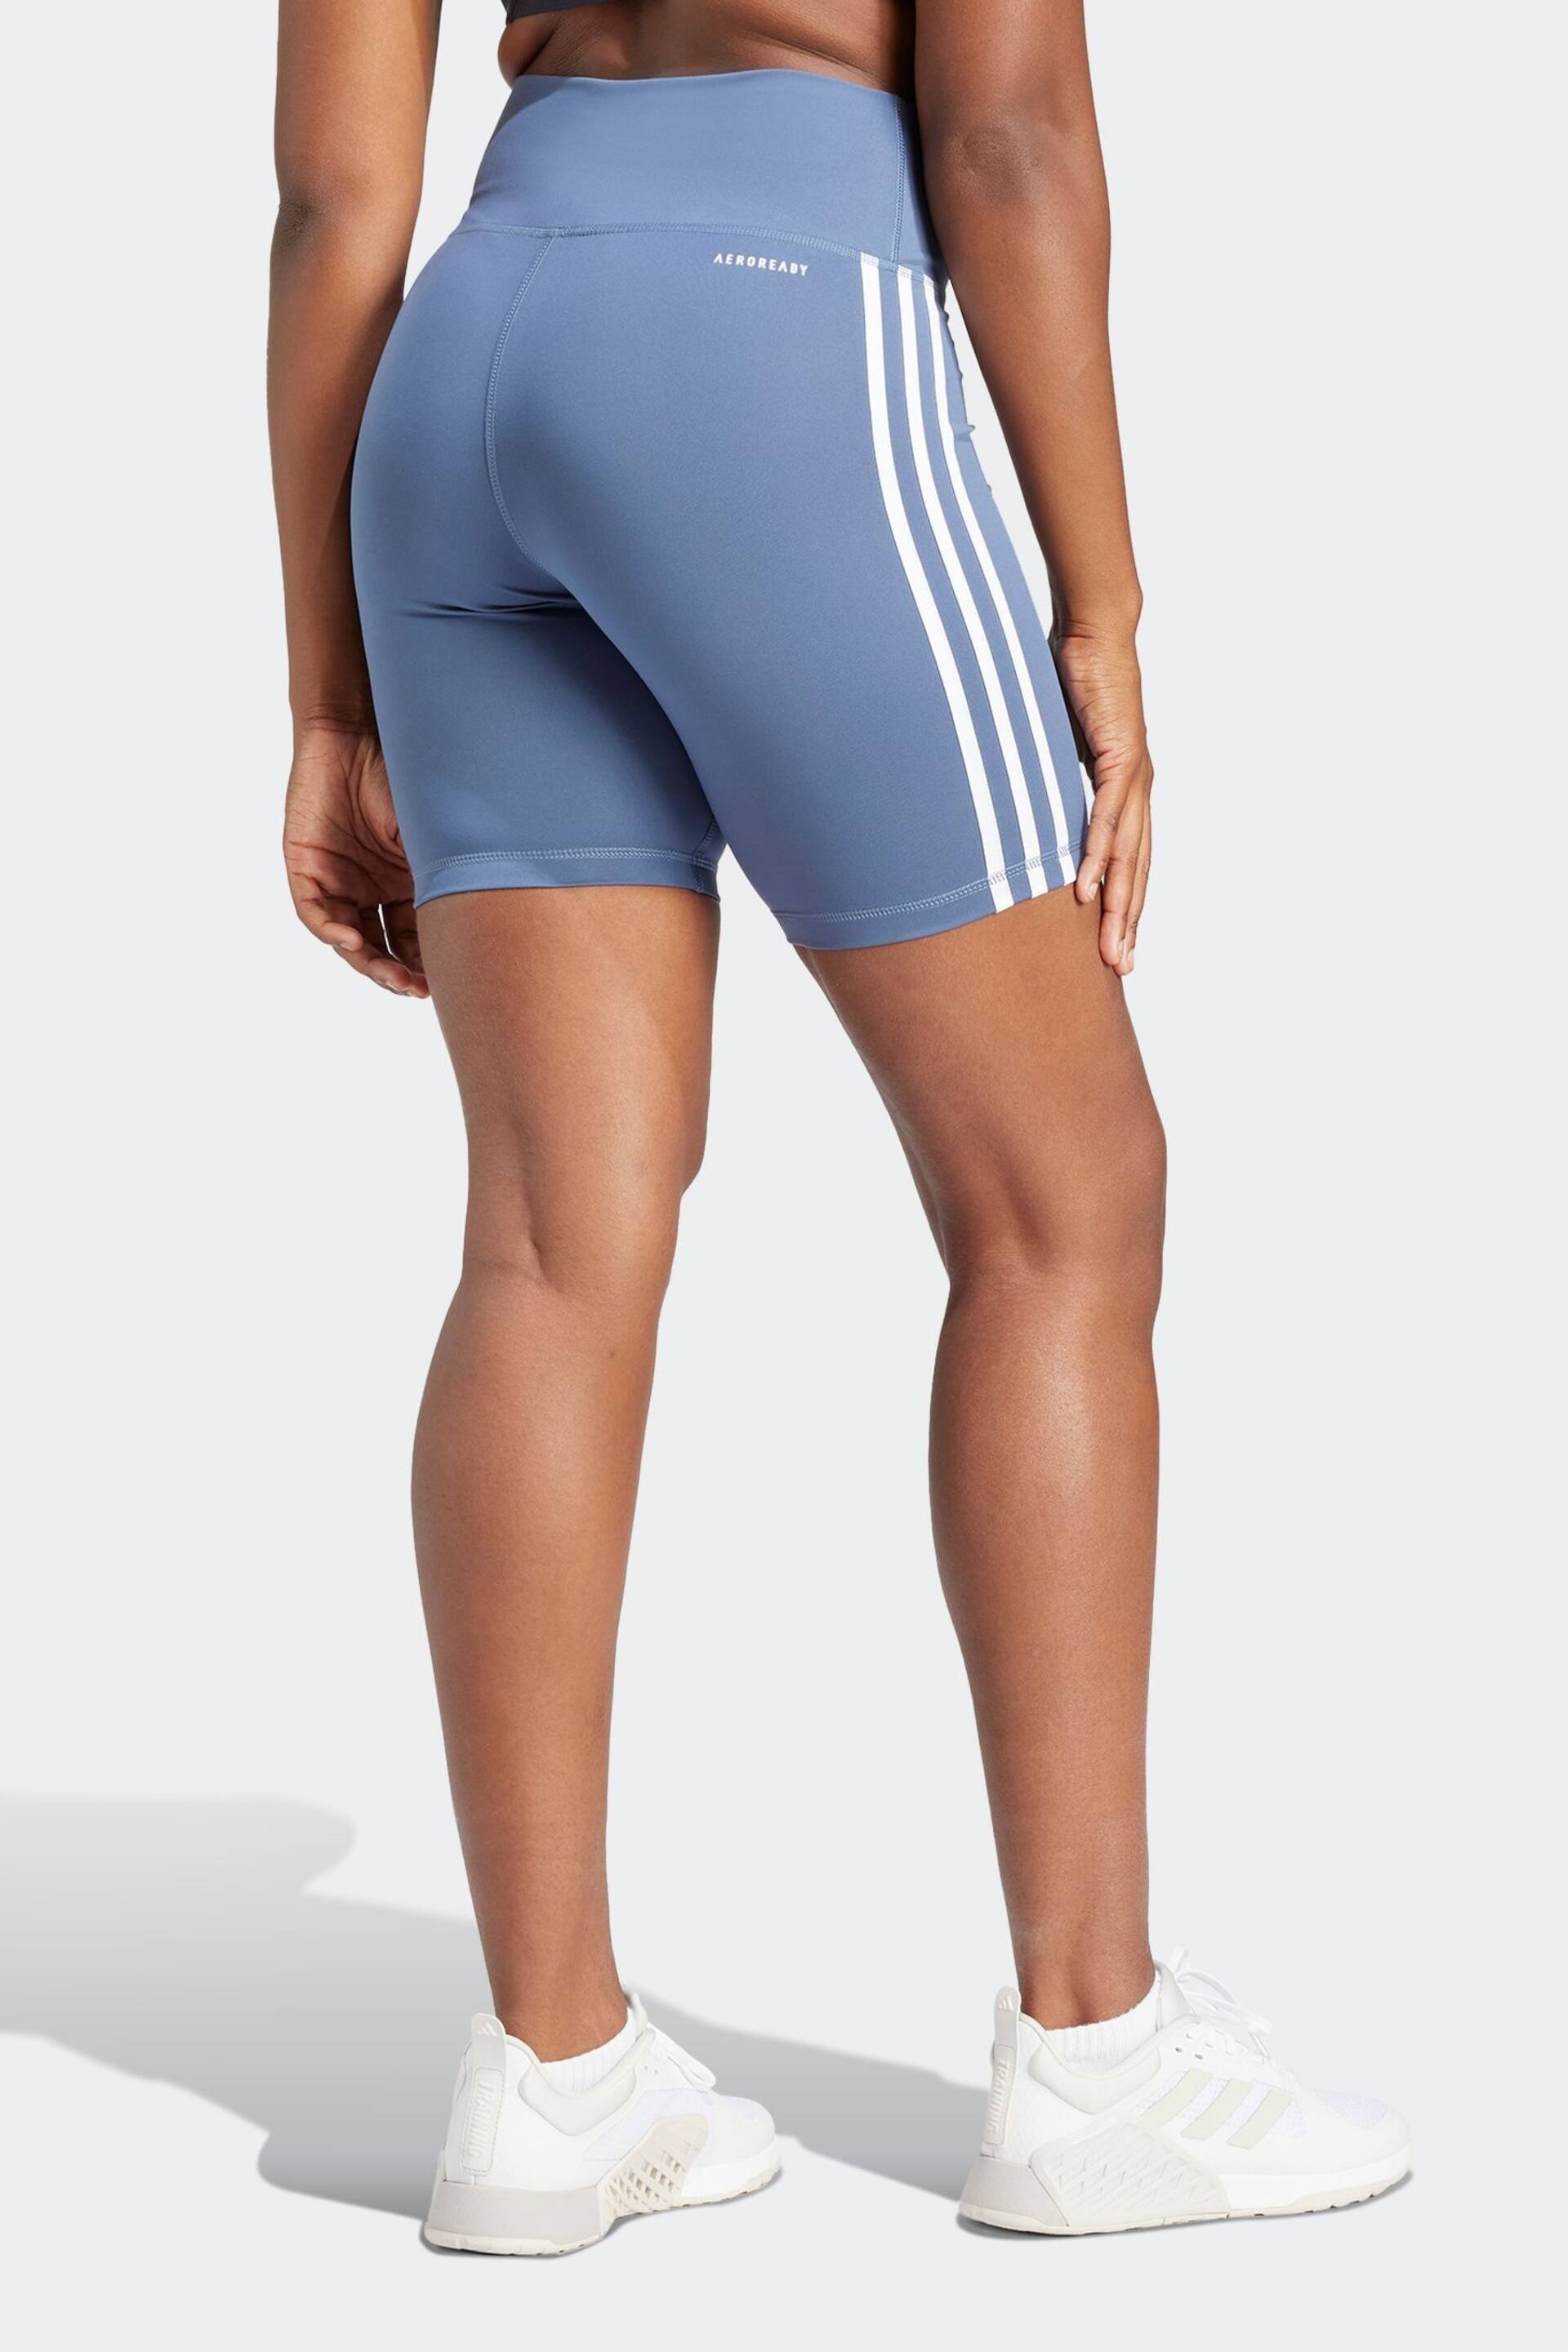 adidas Blue Training Essentials 3 Stripes High Waisted Short Leggings - Image 2 of 6